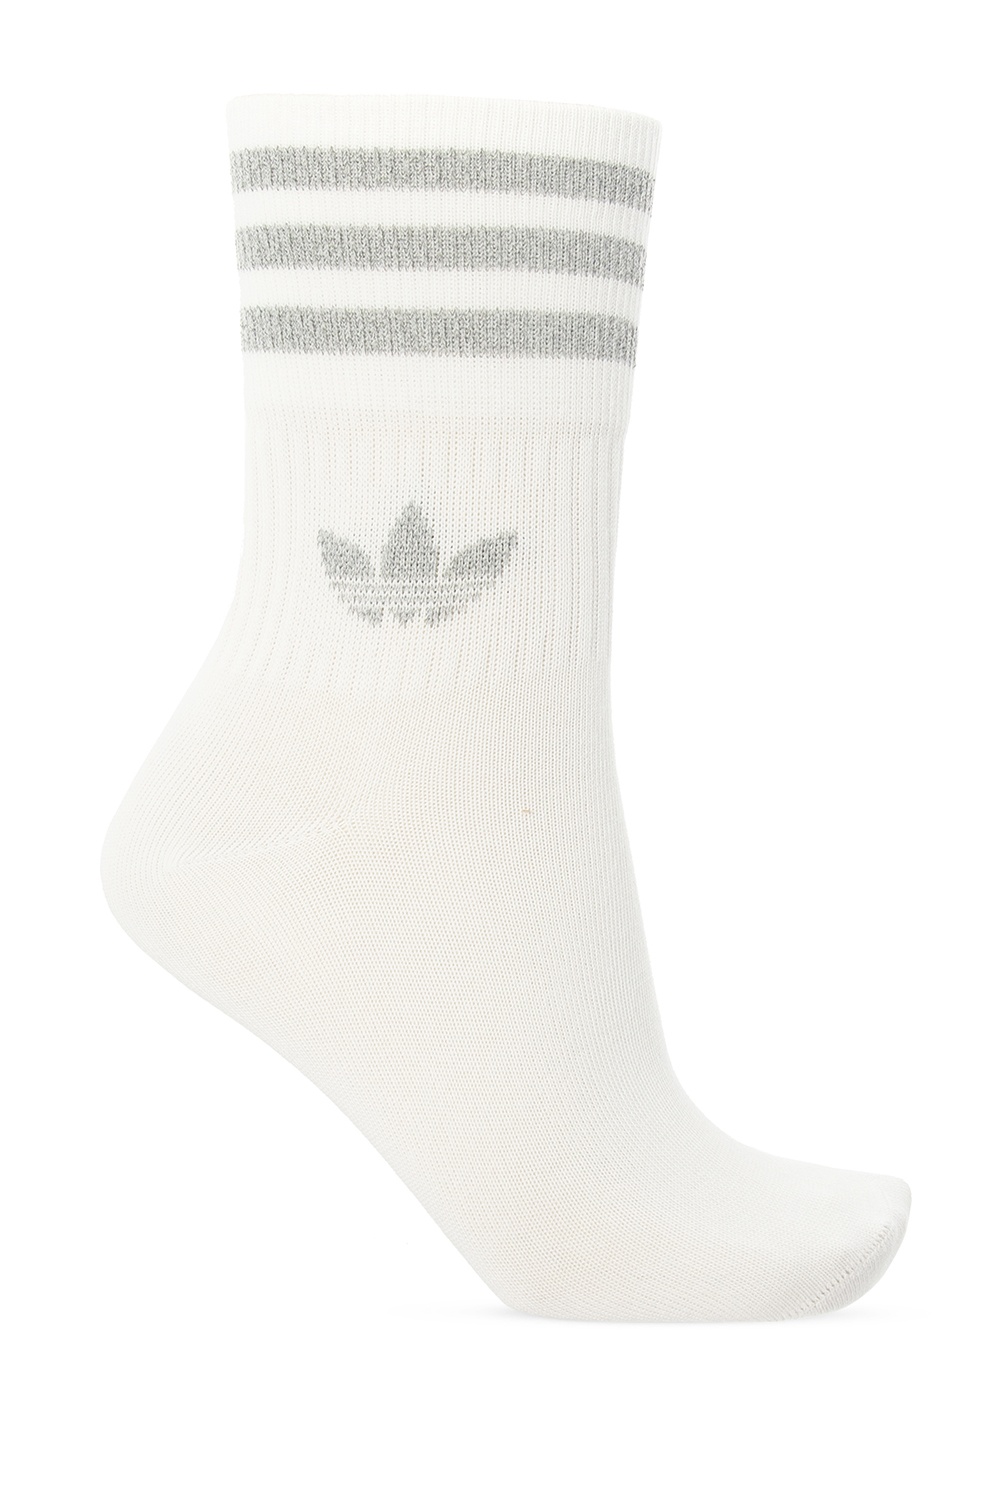 White Reflective socks two-pack ADIDAS Originals - Vitkac GB